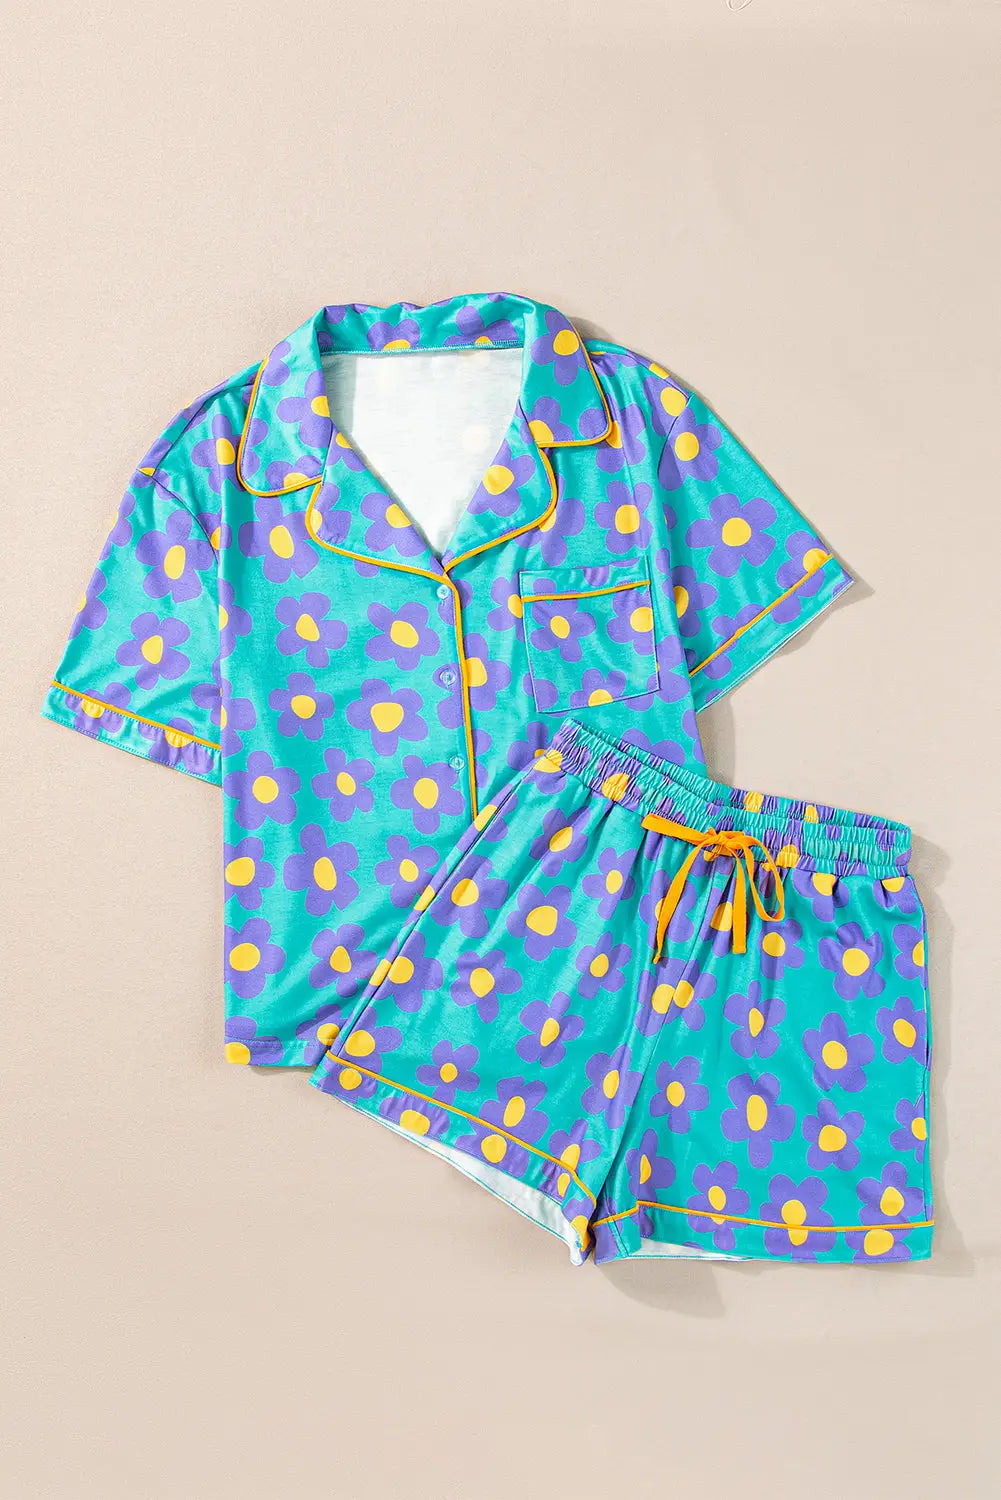 Flower shorts pajamas set - loungewear & sleepwear/sleepwear